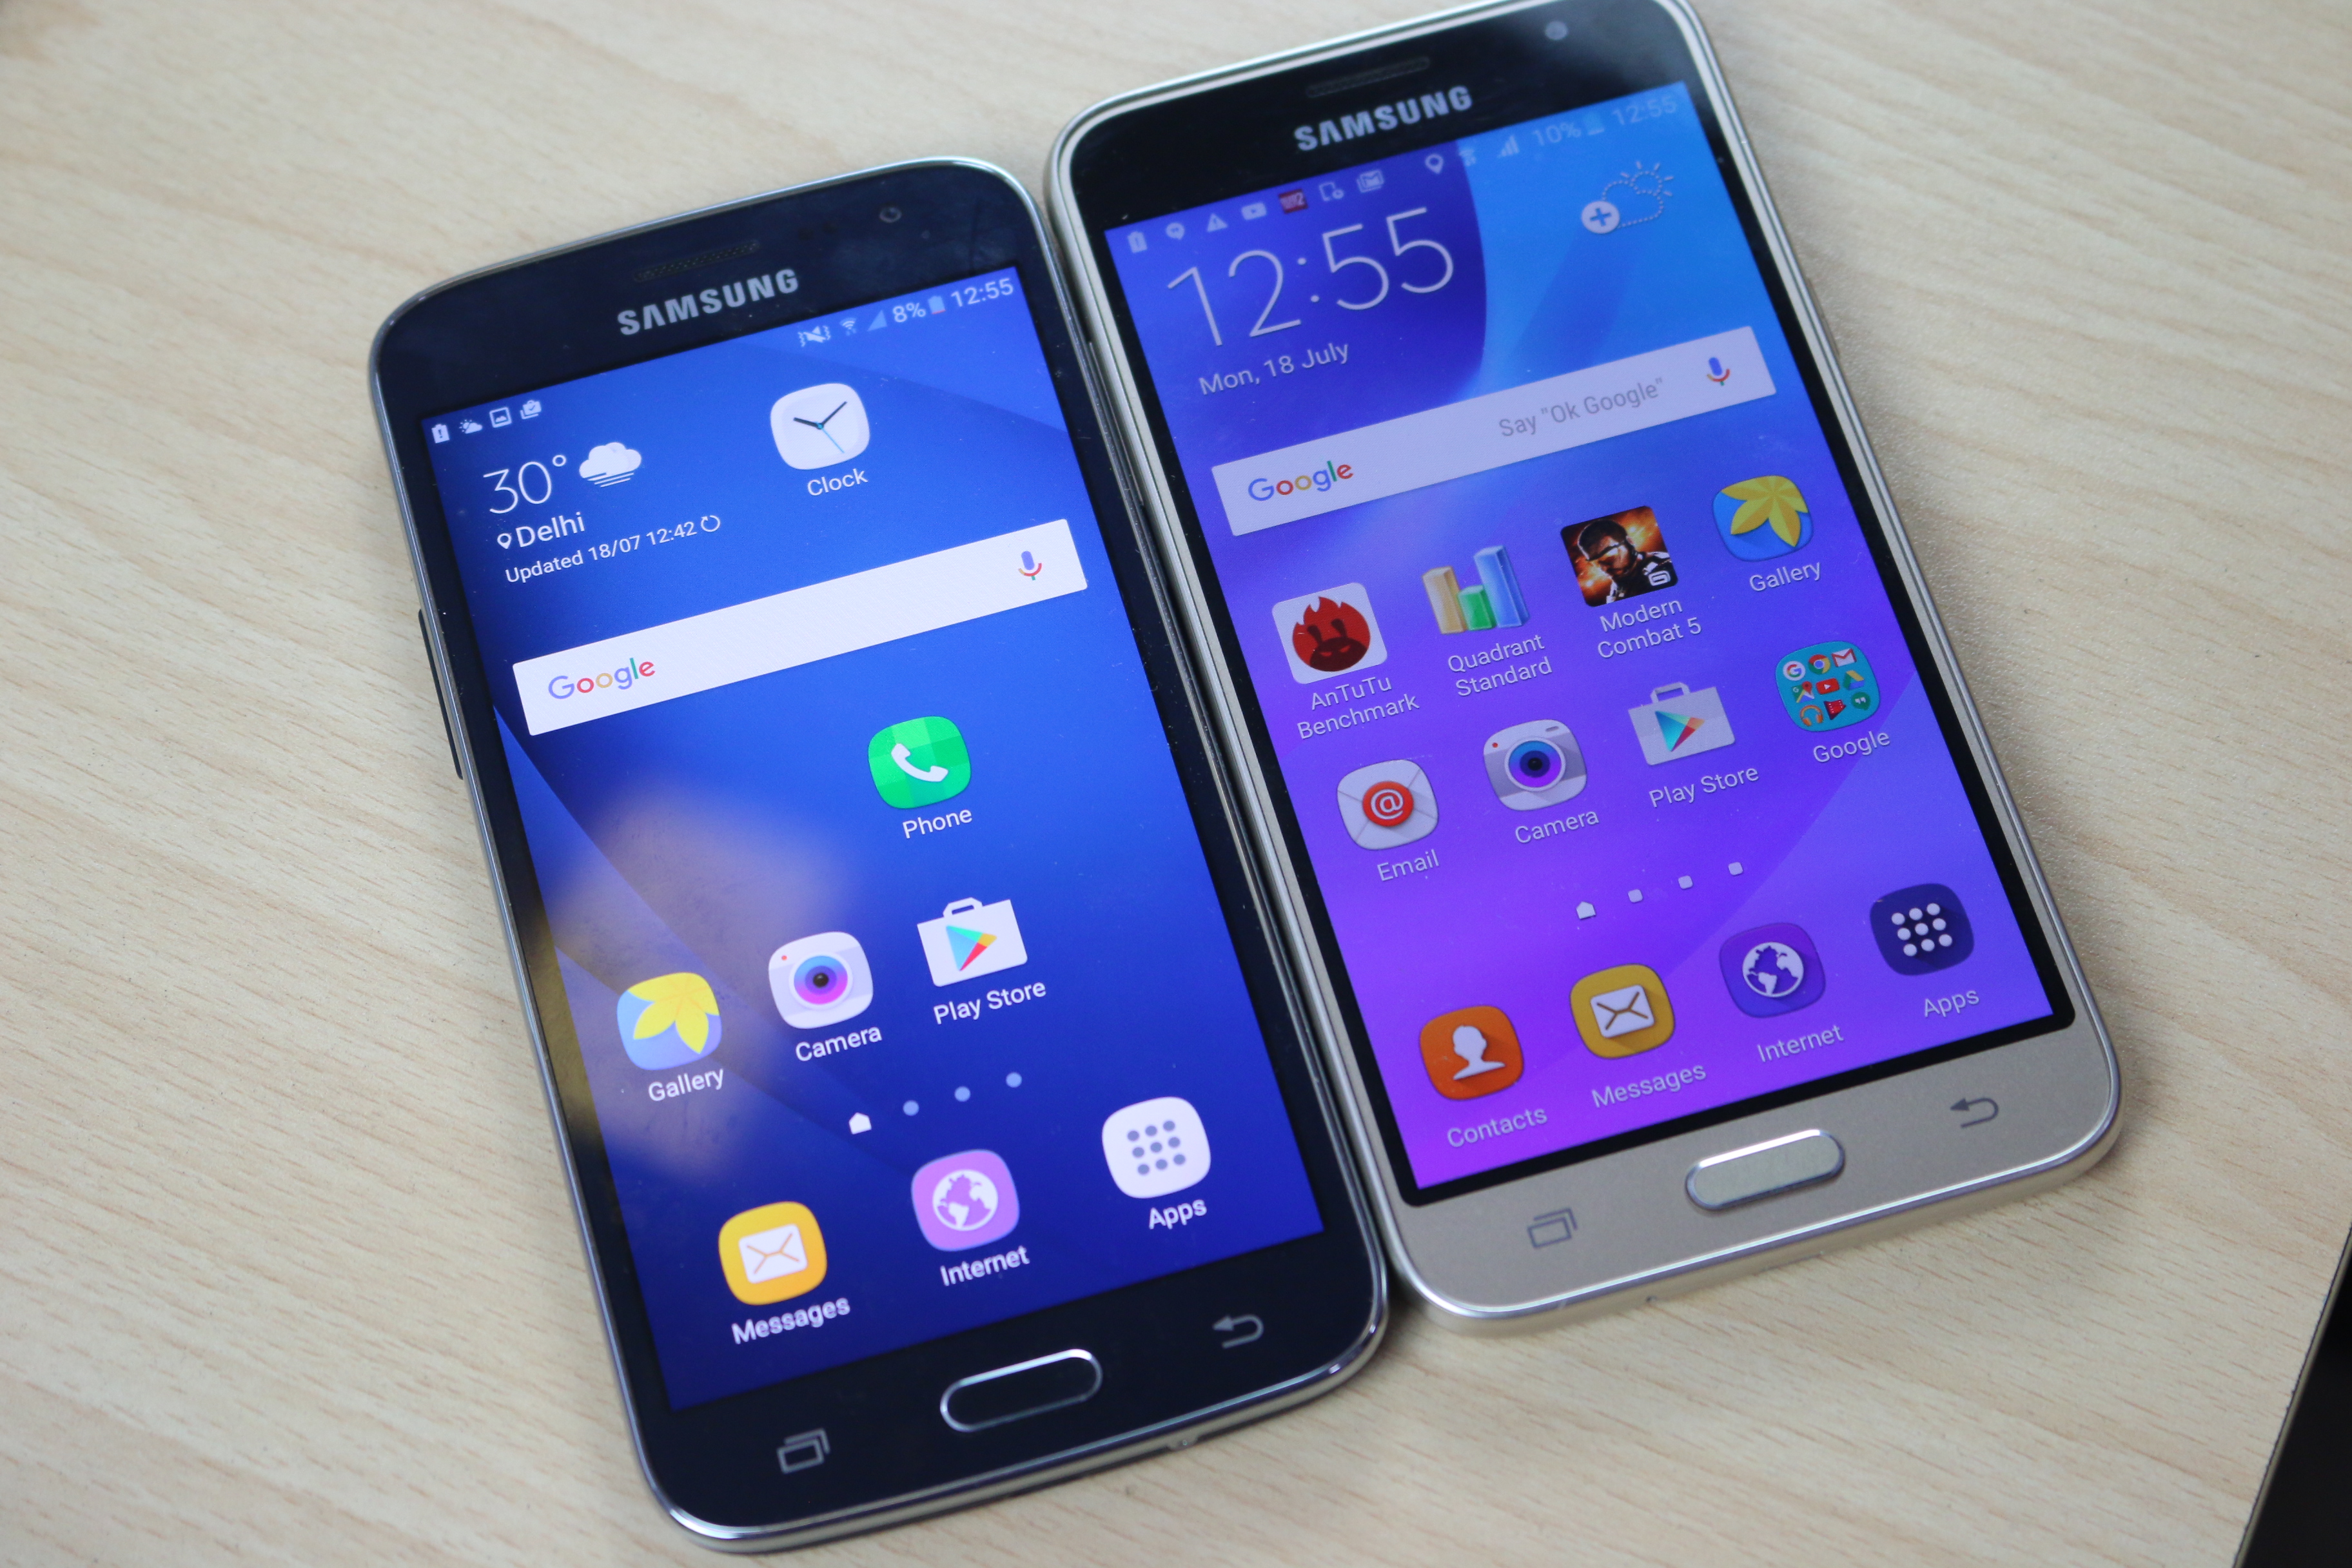 Samsung Galaxy J2 2016 Vs Galaxy J3 2016 Comparison Review